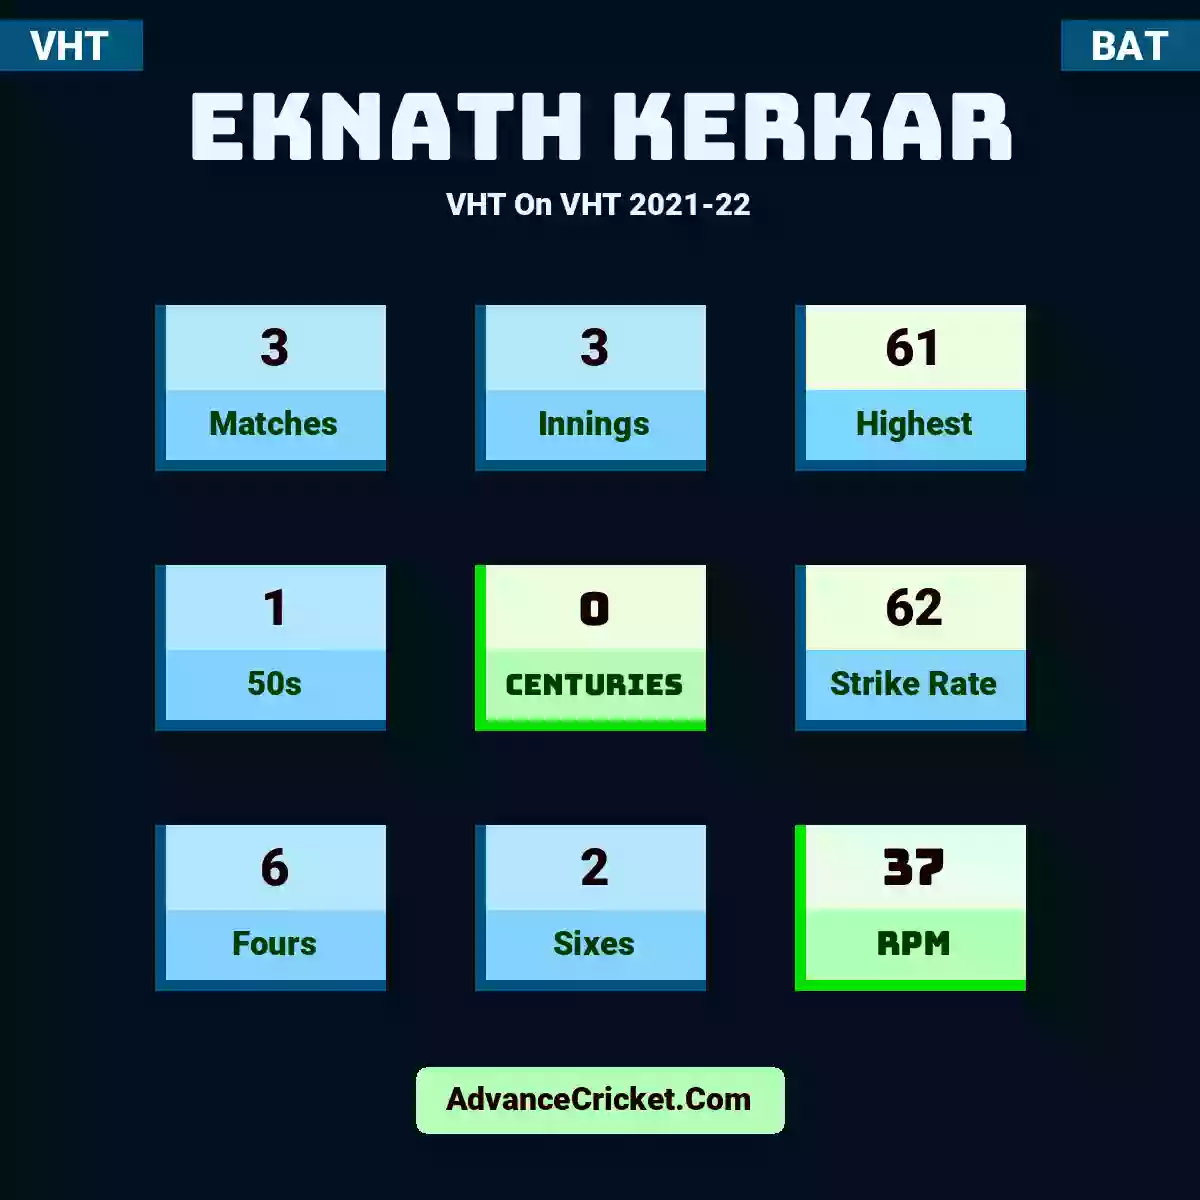 Eknath Kerkar VHT  On VHT 2021-22, Eknath Kerkar played 3 matches, scored 61 runs as highest, 1 half-centuries, and 0 centuries, with a strike rate of 62. E.Kerkar hit 6 fours and 2 sixes, with an RPM of 37.